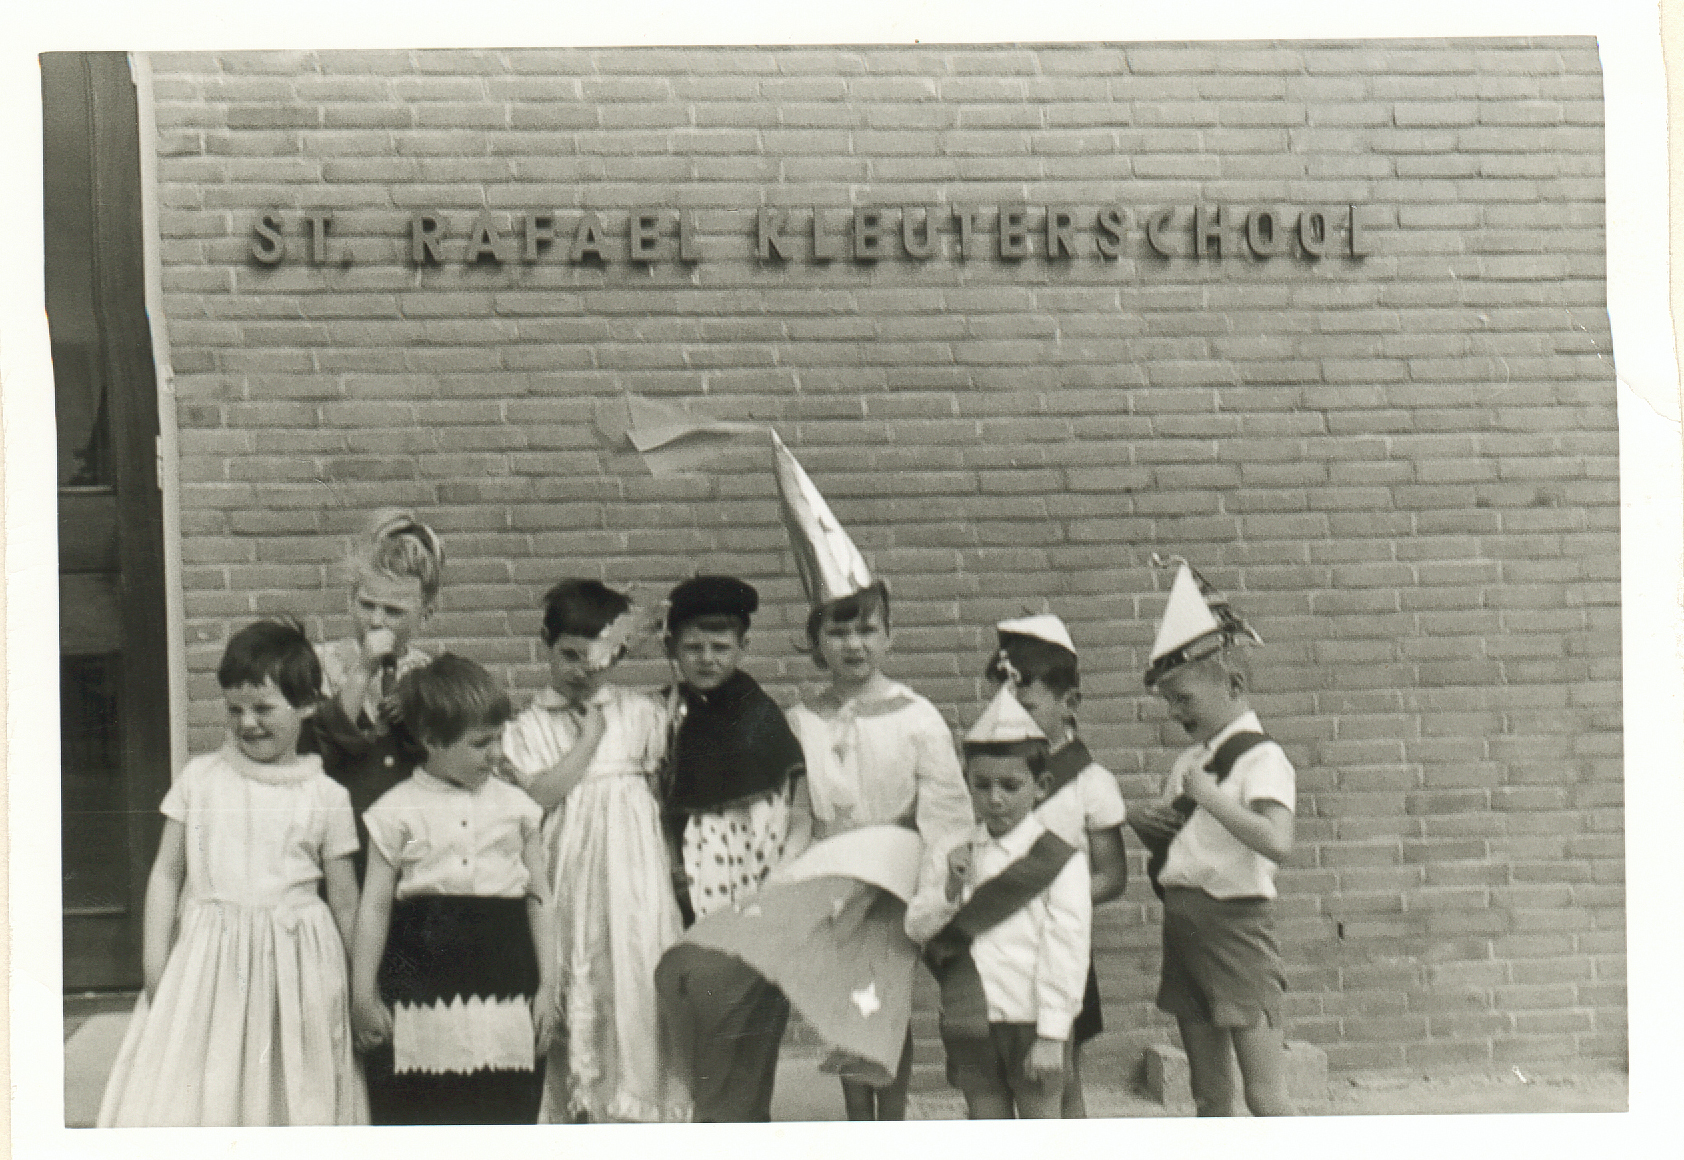 St. Rafael kleuterschool foto